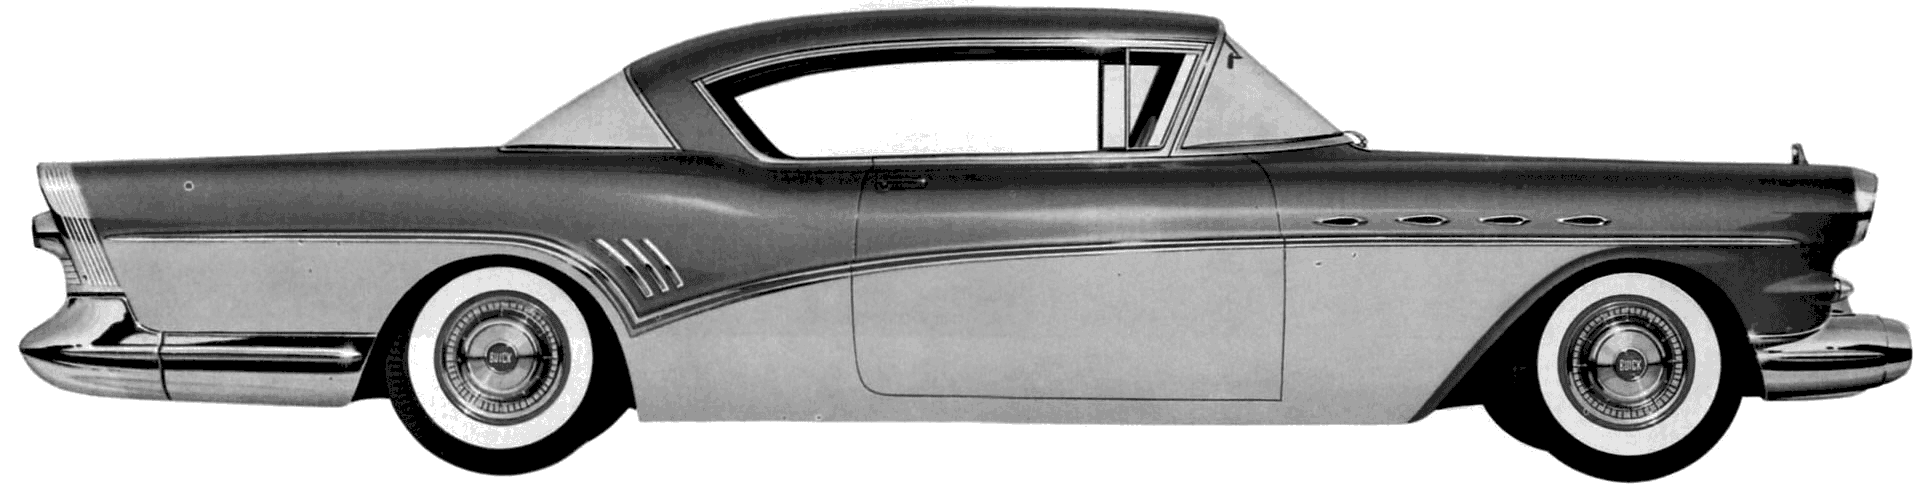 Cotxe Buick Super Riviera Hardtop 1957 